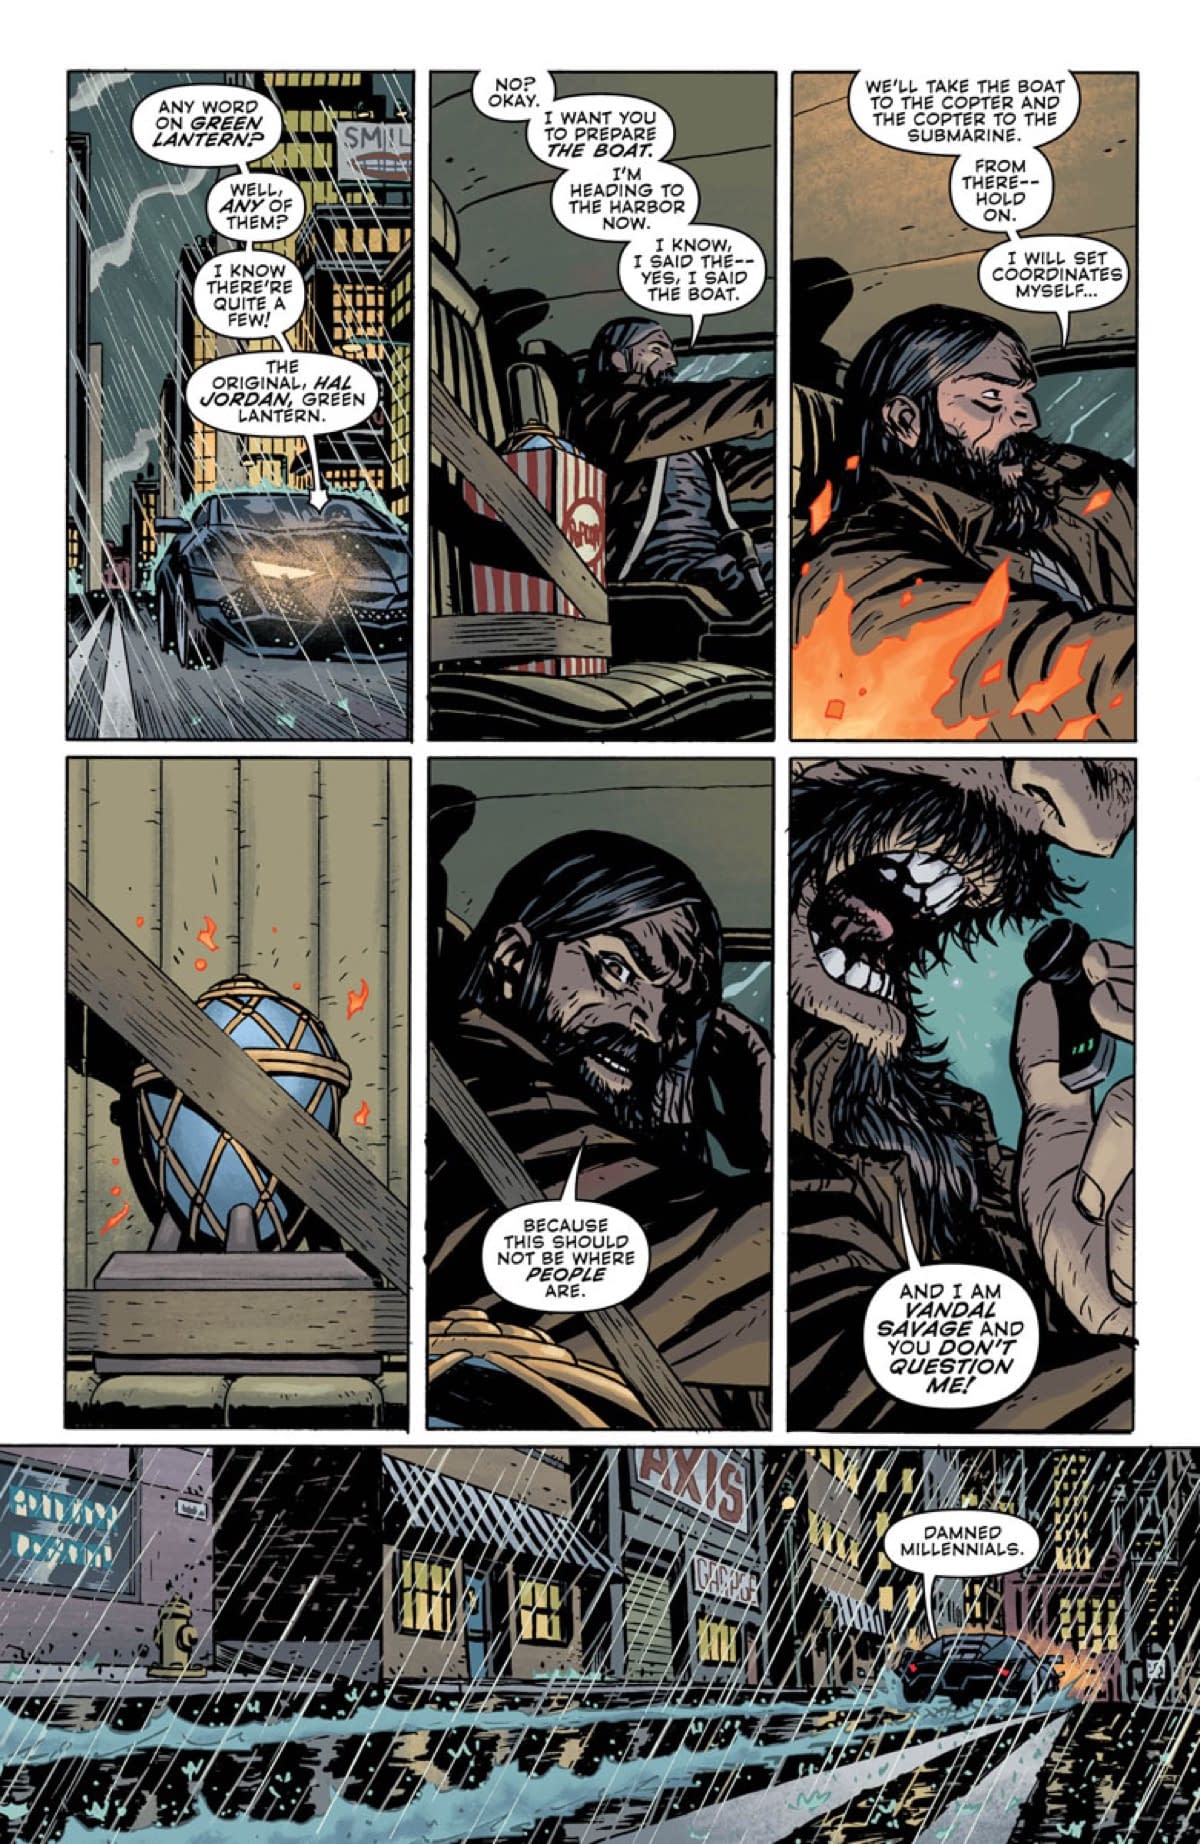 Vandal Savage Complains About Millennials in Batman Universe #5 [Preview]